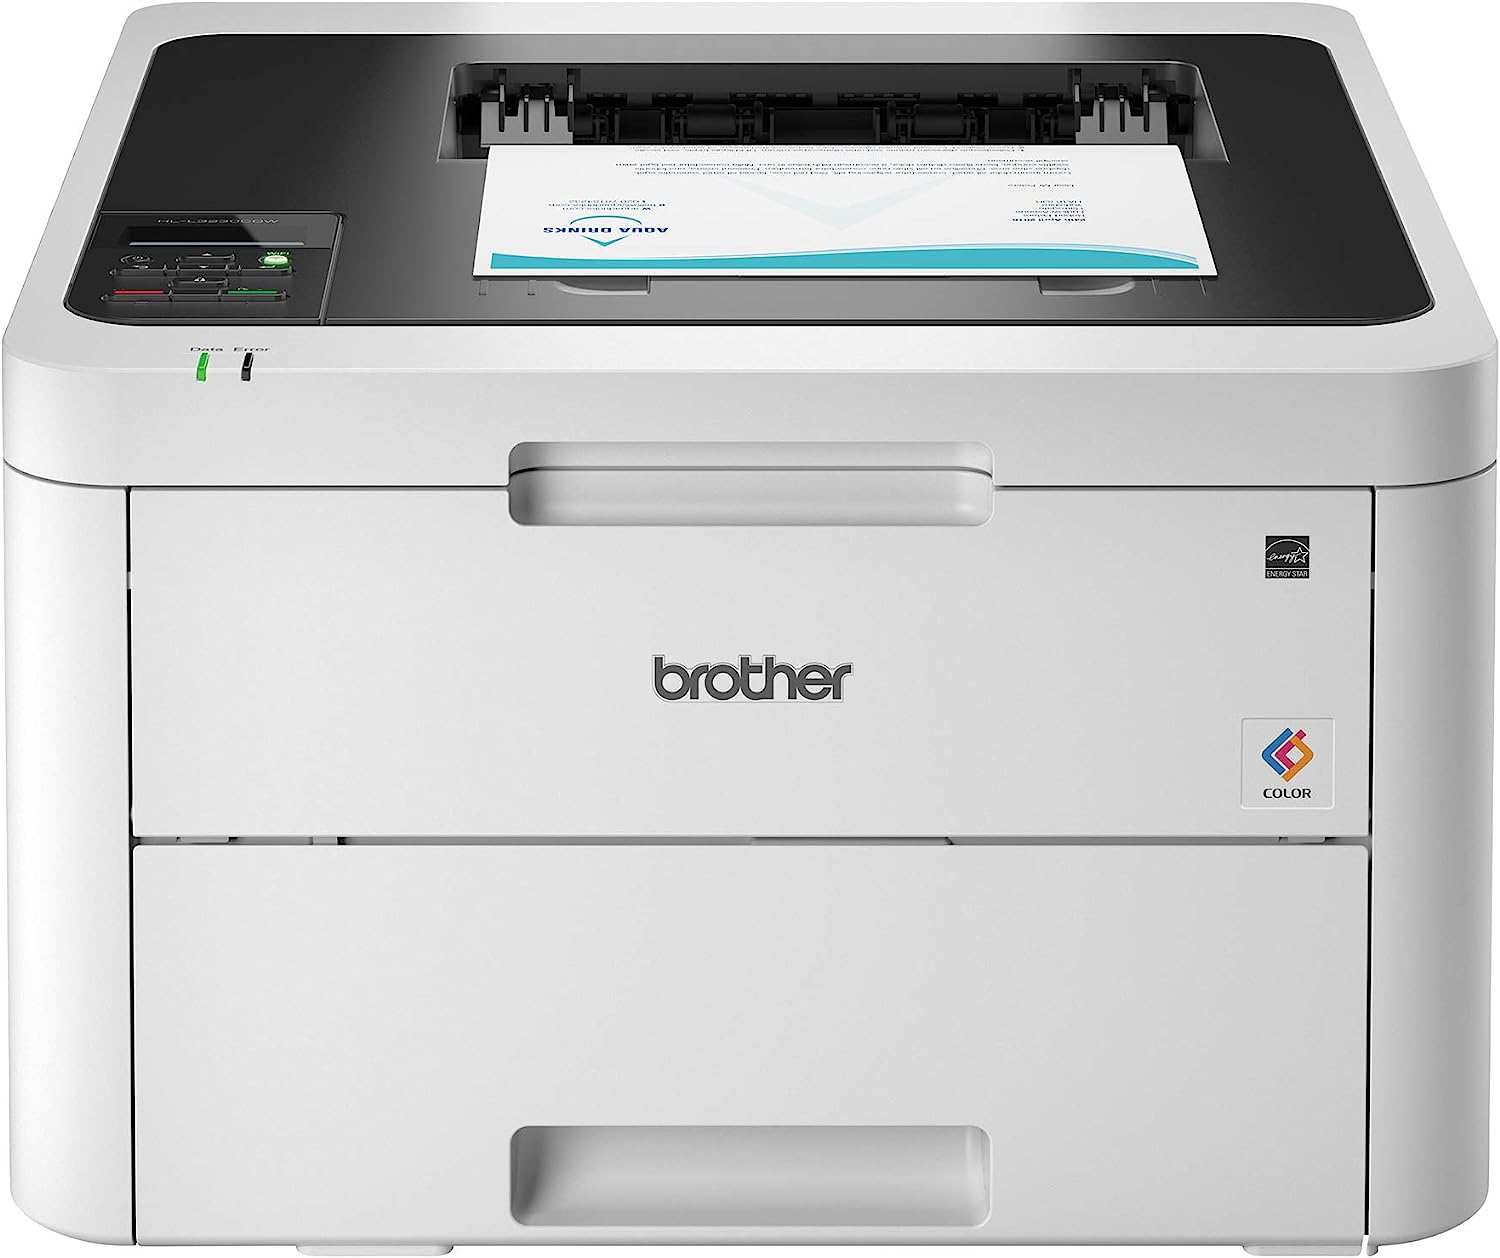 Brother HL-L3230CDW Compact Digital Color Printer [...]